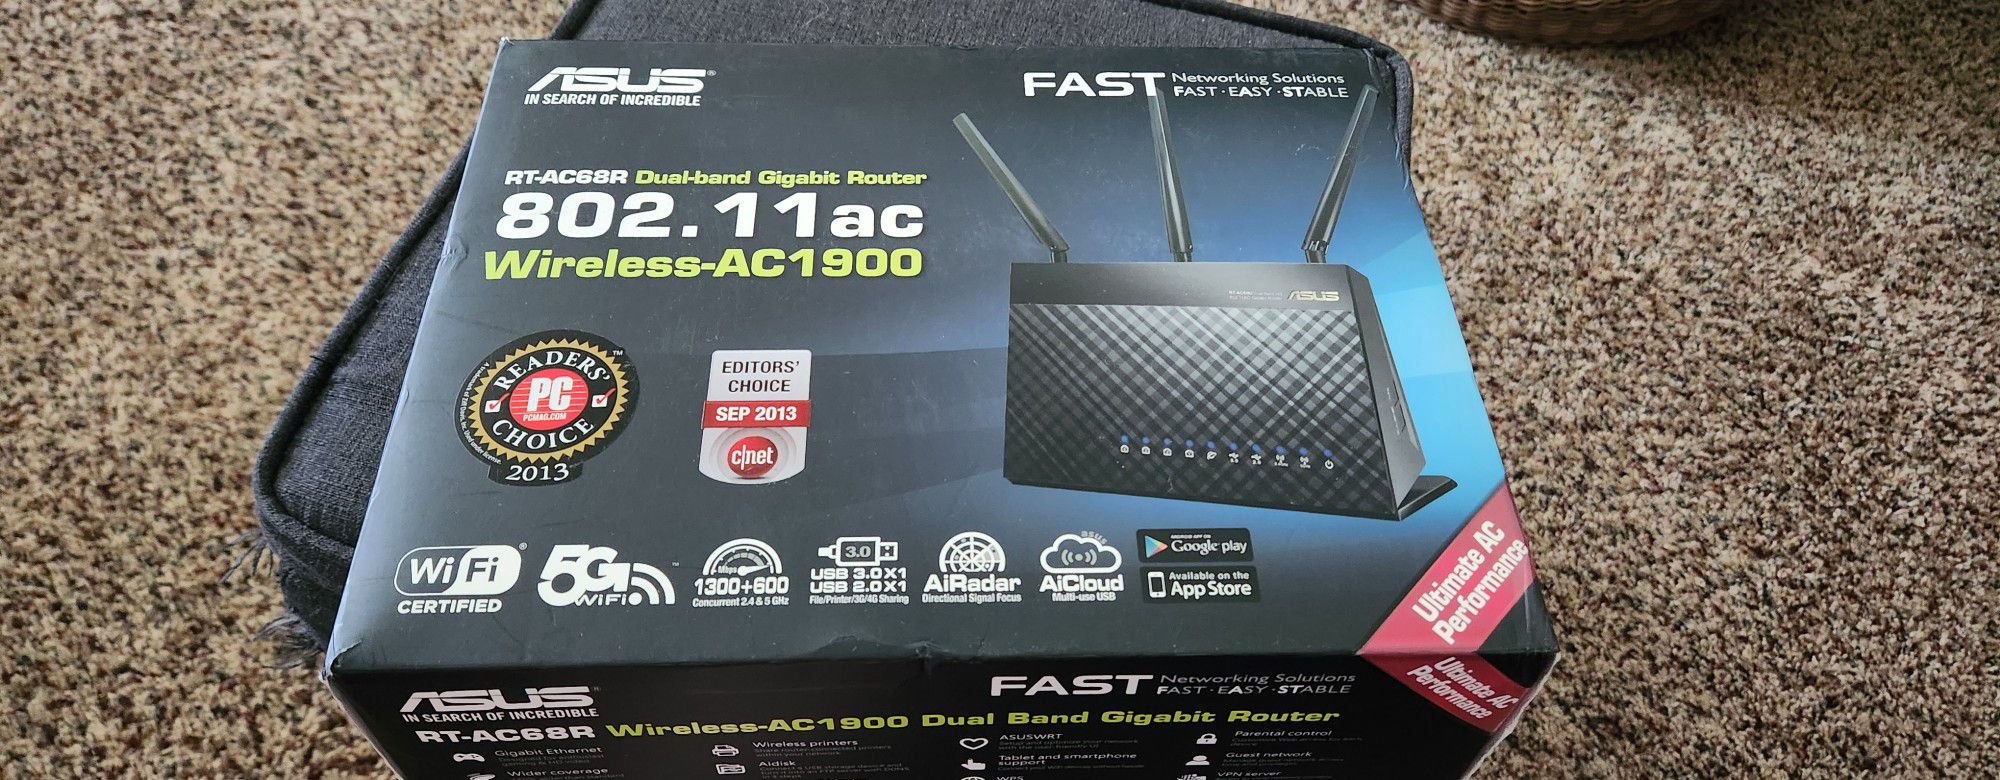 Asus 802.11ac wireless-AC1900